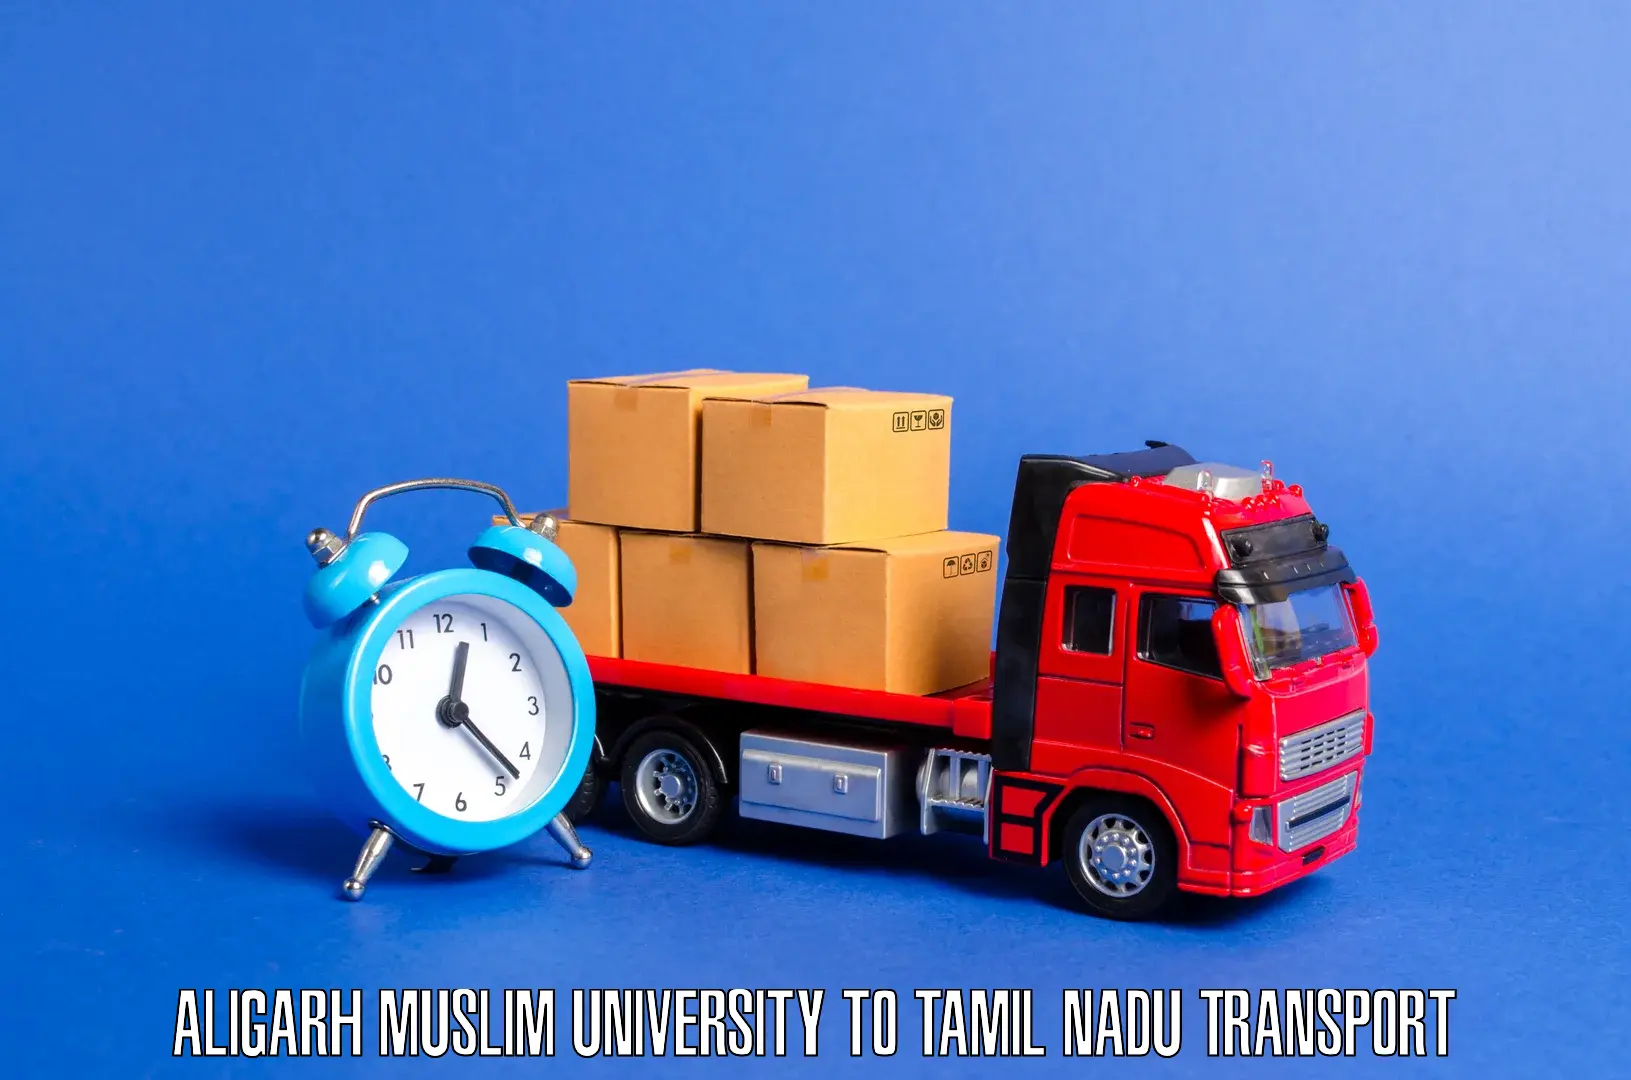 Bike transport service Aligarh Muslim University to SRM Institute of Science and Technology Chennai